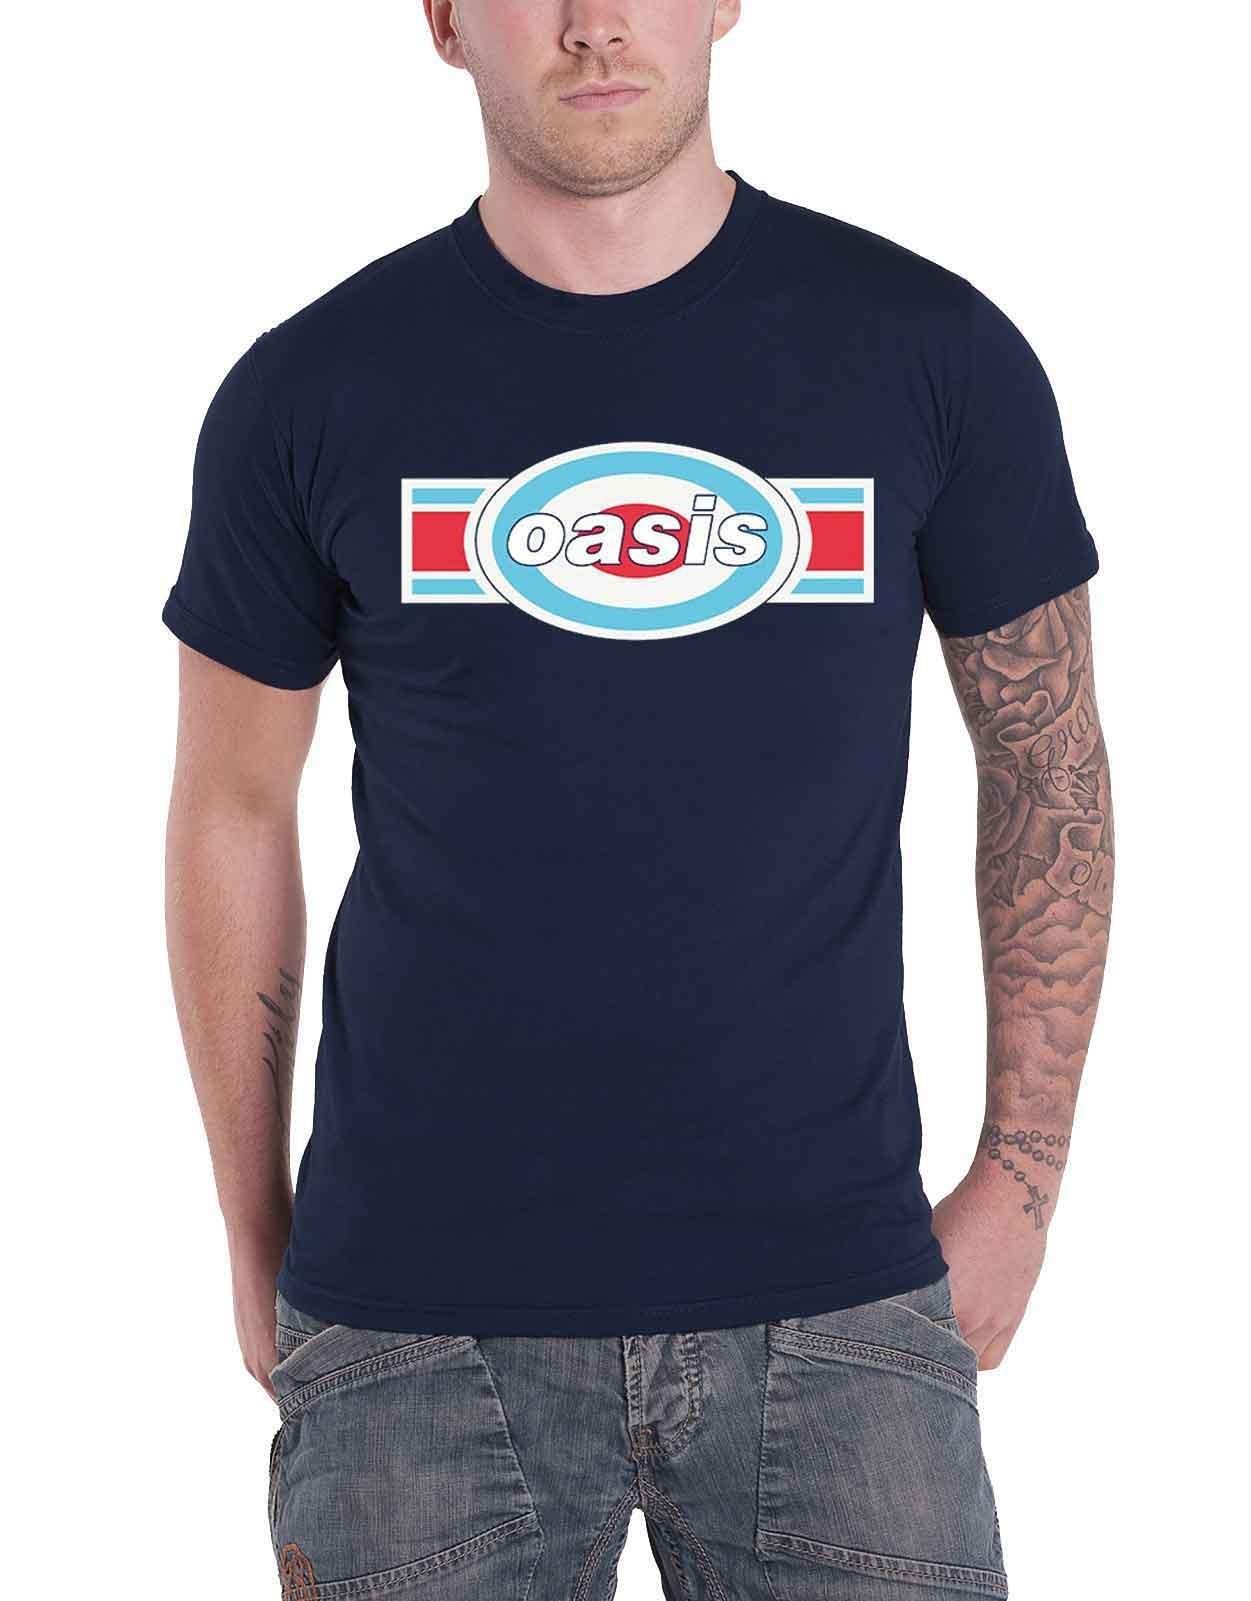 Продолговатая футболка с логотипом Target Oasis, темно-синий